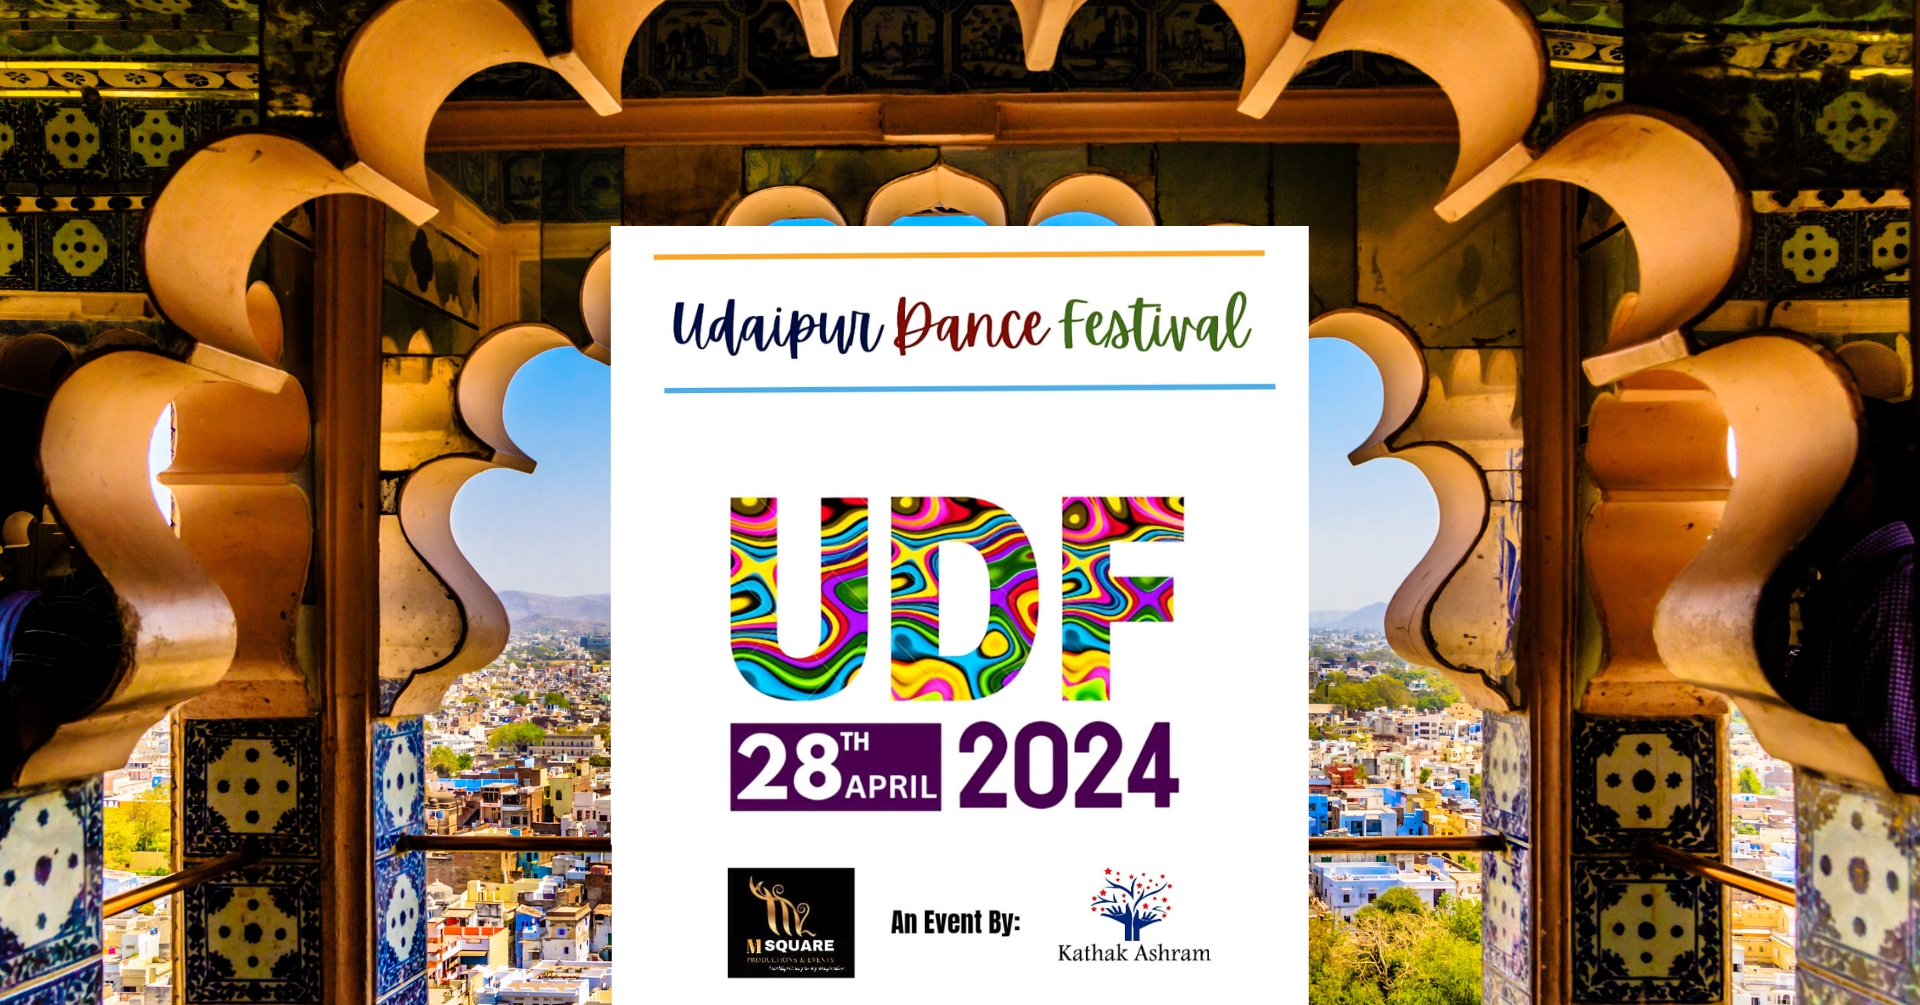 Udaipur Dance Festival 2024